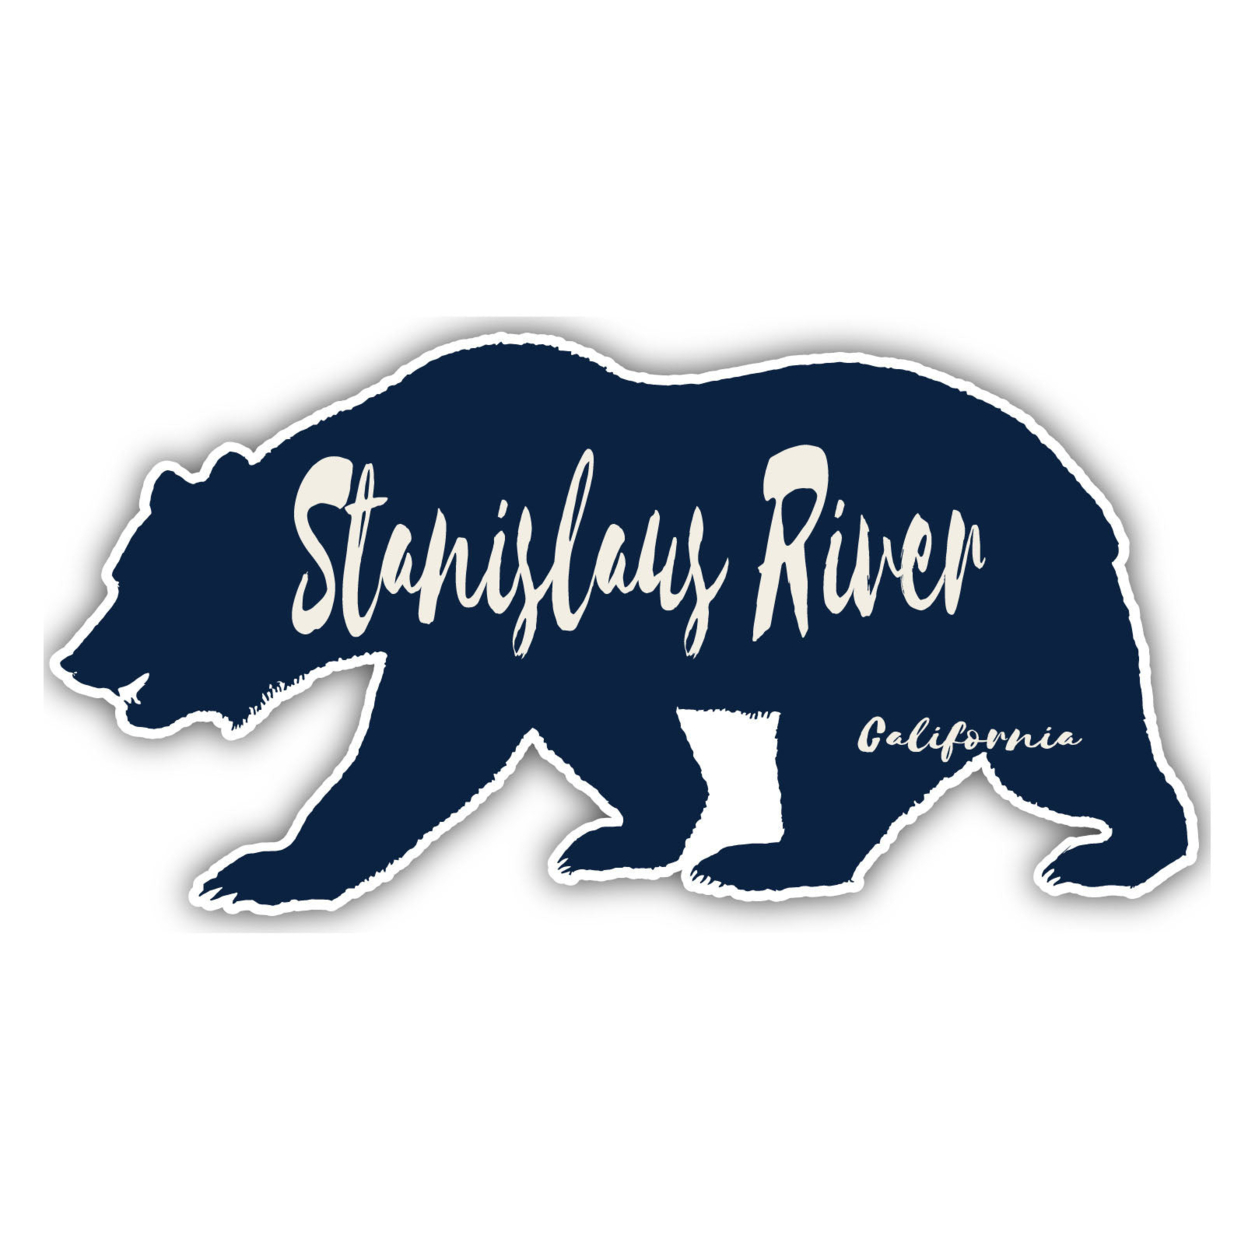 Stanislaus River California Souvenir Decorative Stickers (Choose Theme And Size) - Single Unit, 2-Inch, Bear